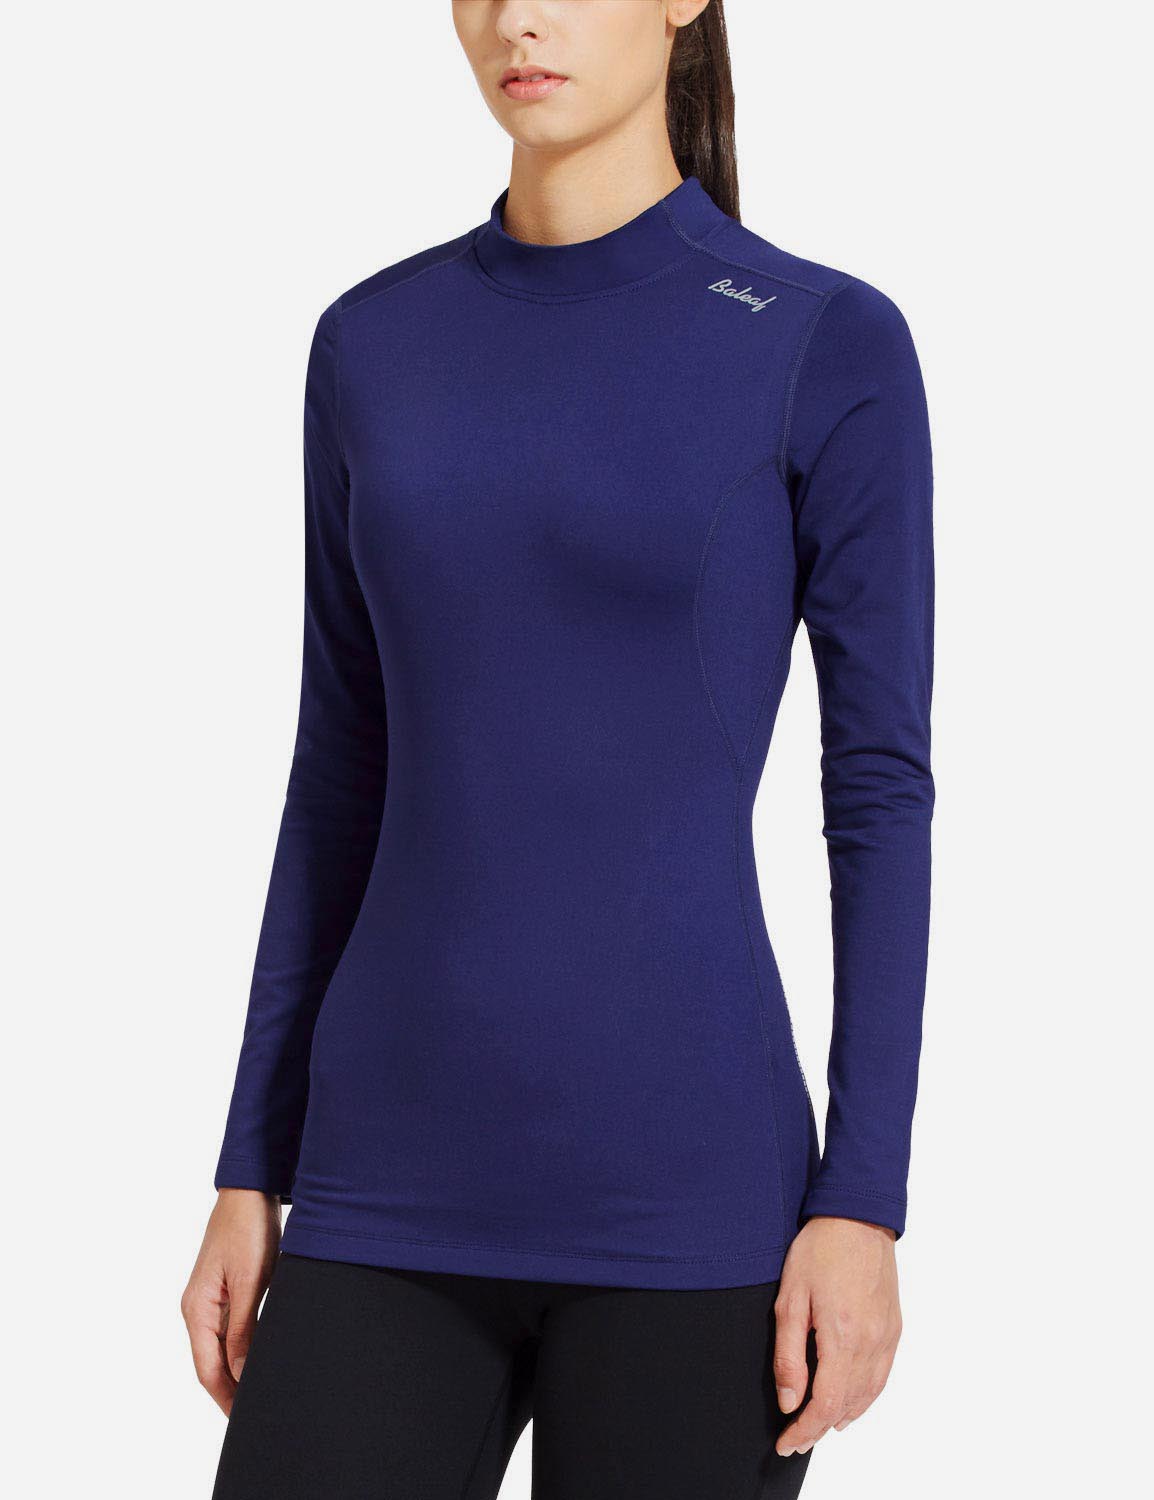 BALEAF Women's Long Sleeve Workout Tops Compression Running Shirts